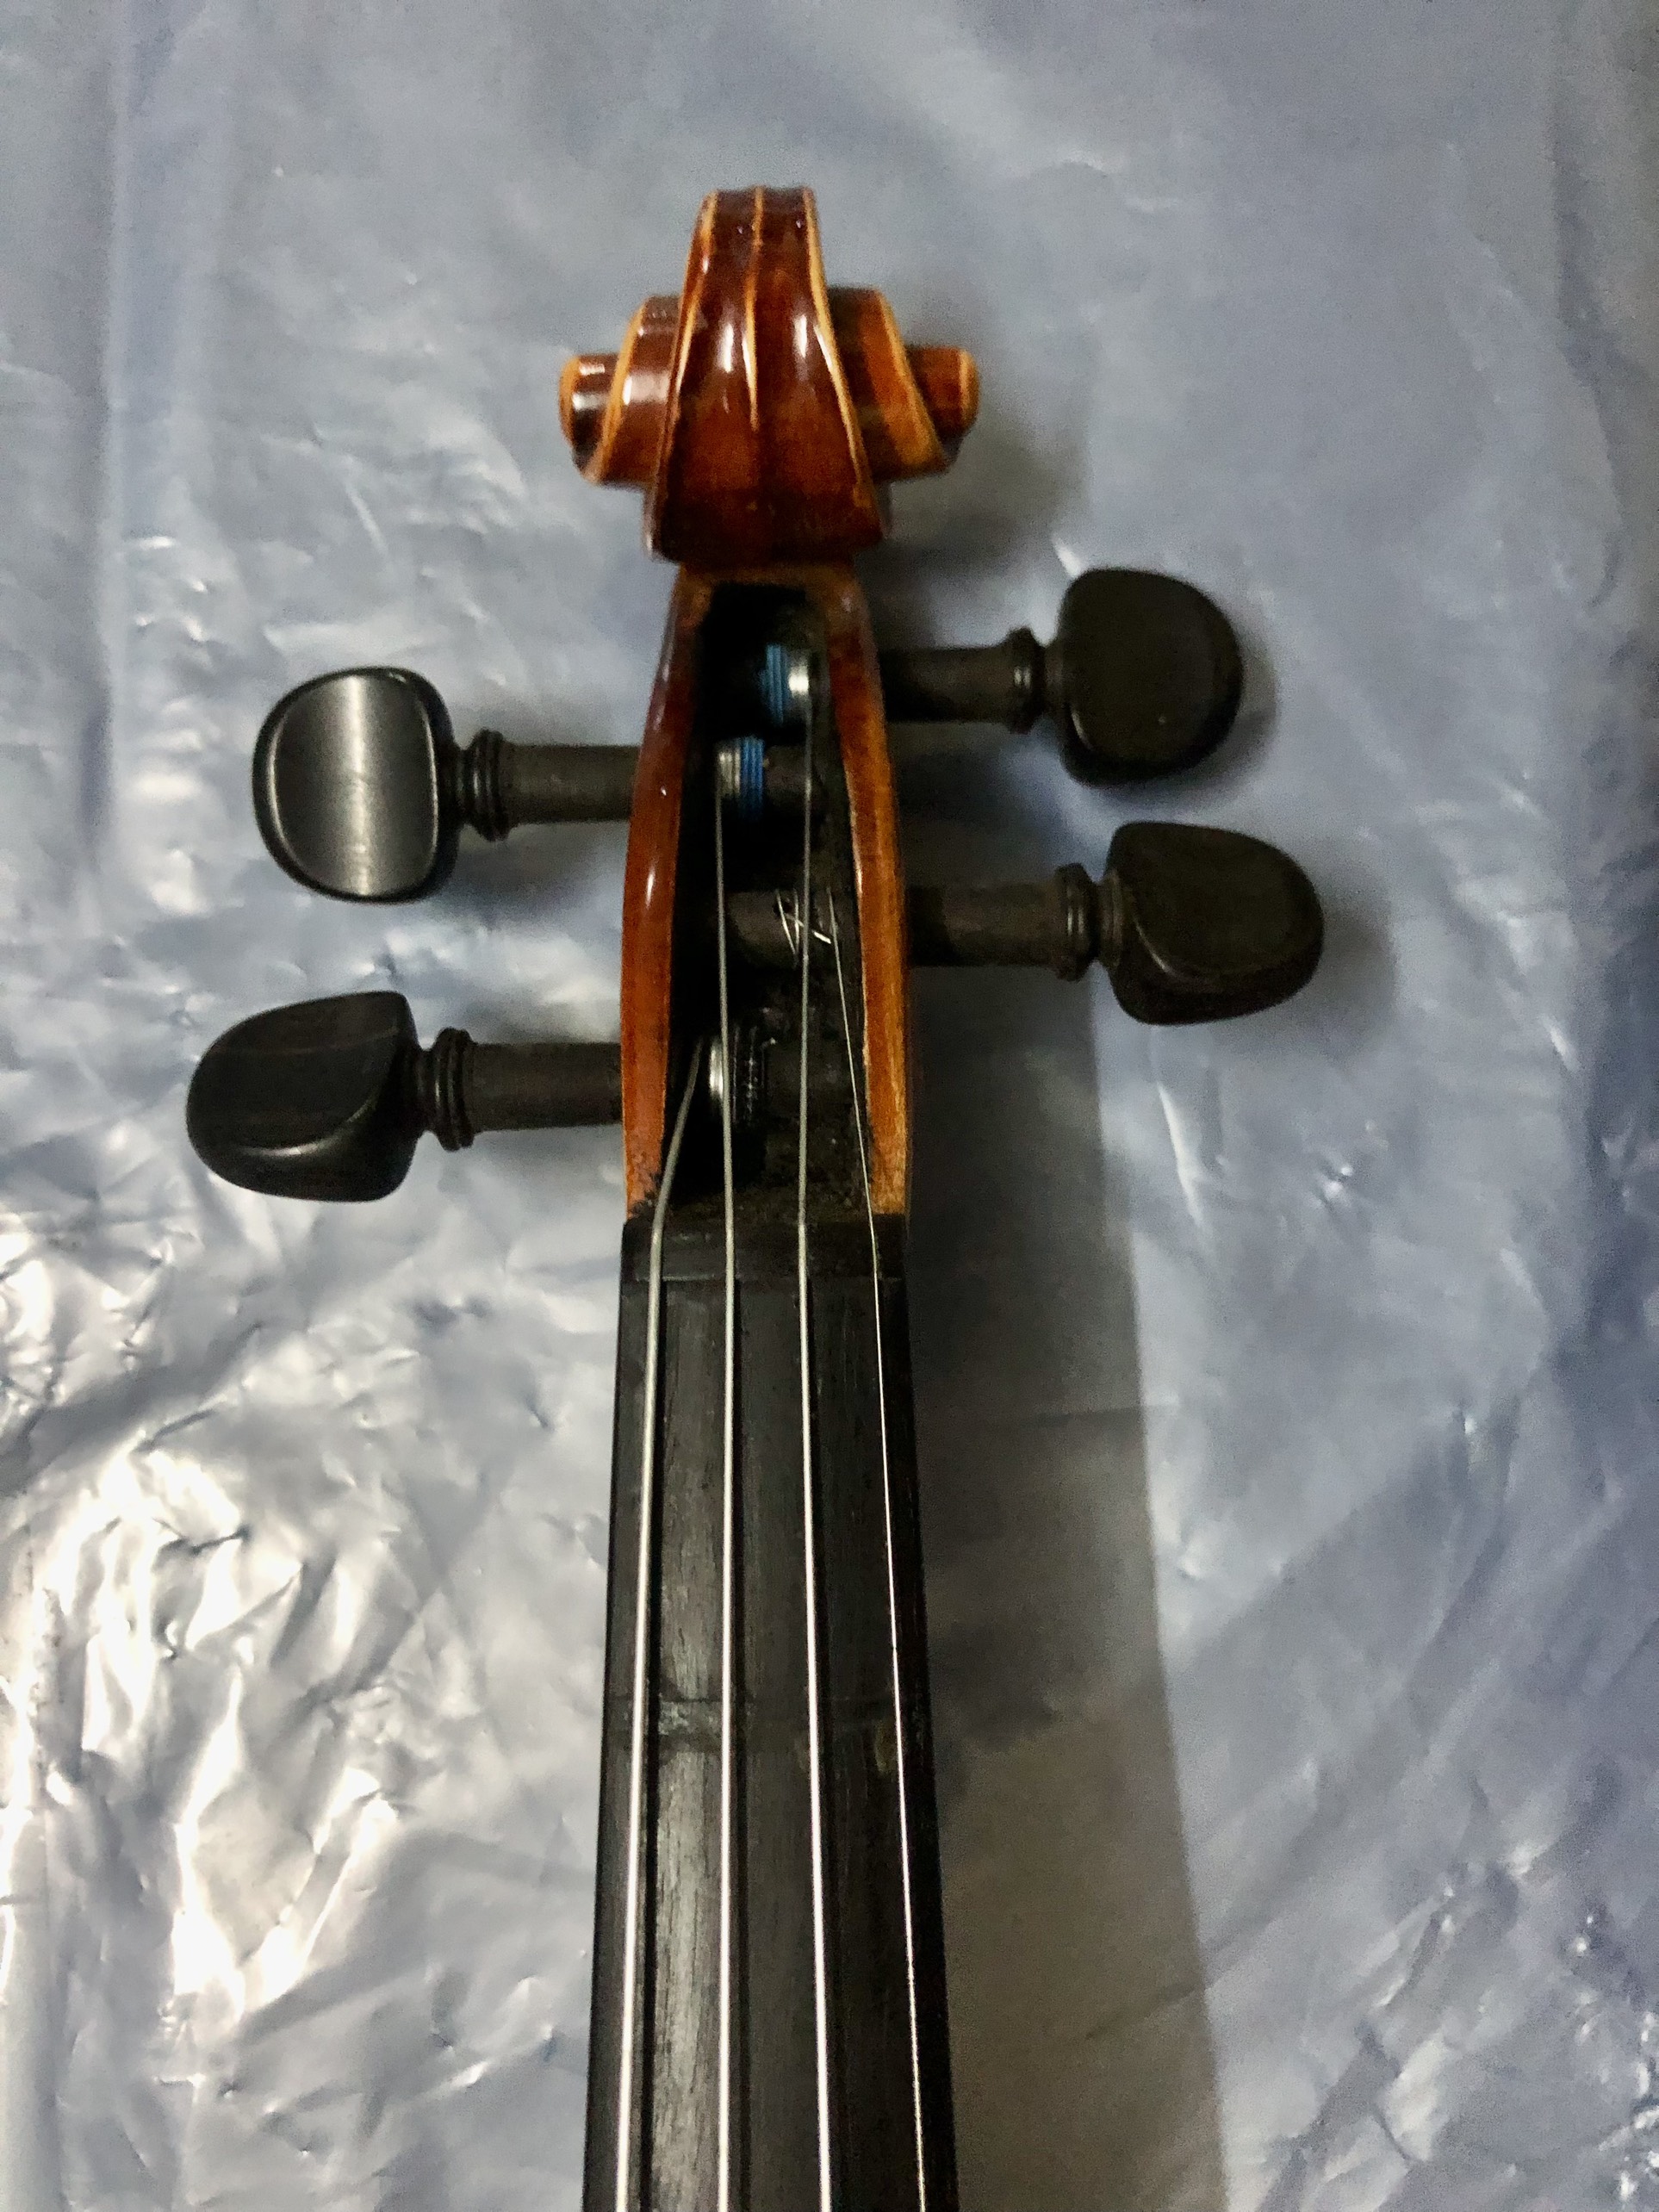 Violin Châu Âu - size 3/4 - West Germany - Âm thanh vang hay